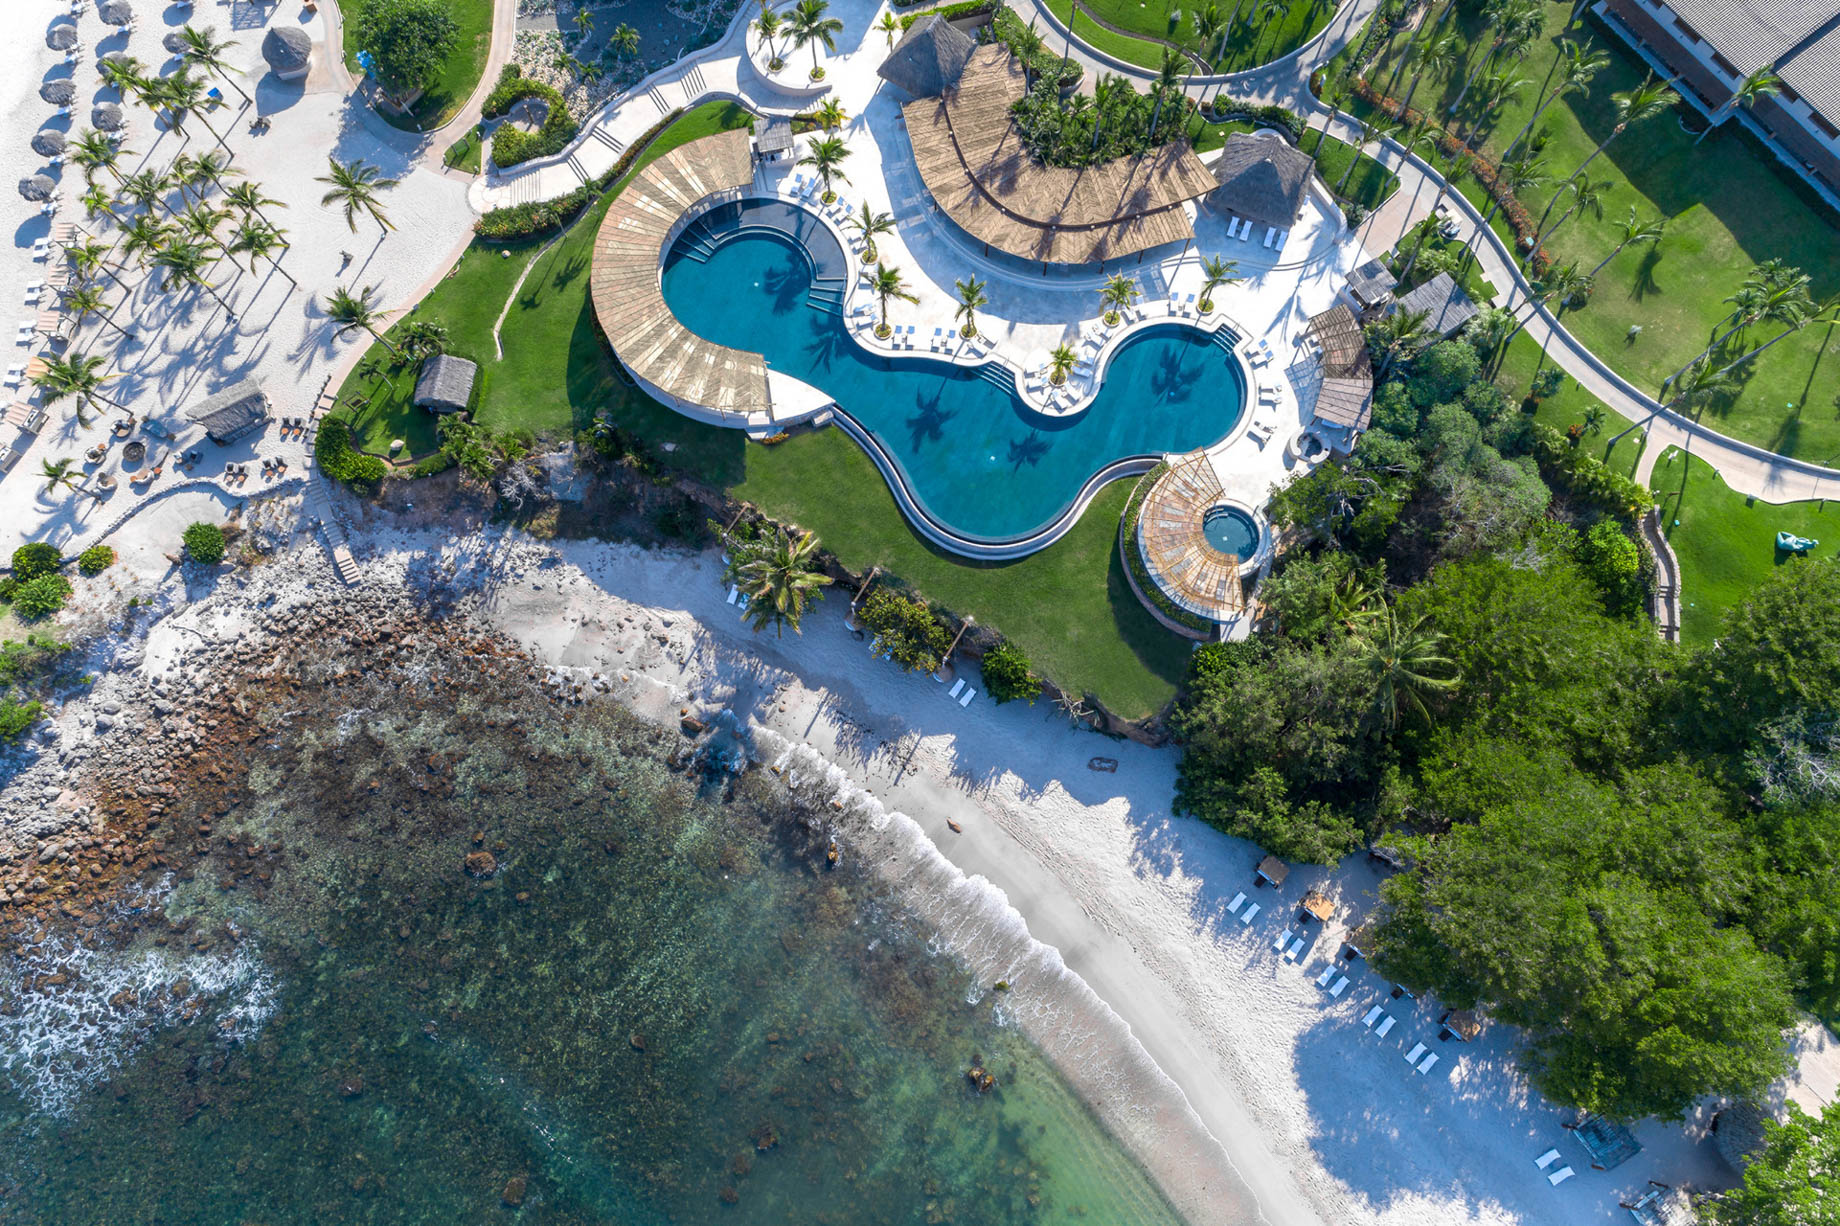 Four Seasons Resort Punta Mita – Nayarit, Mexico – Overhead Infinity Pool and Private White Sand Beach